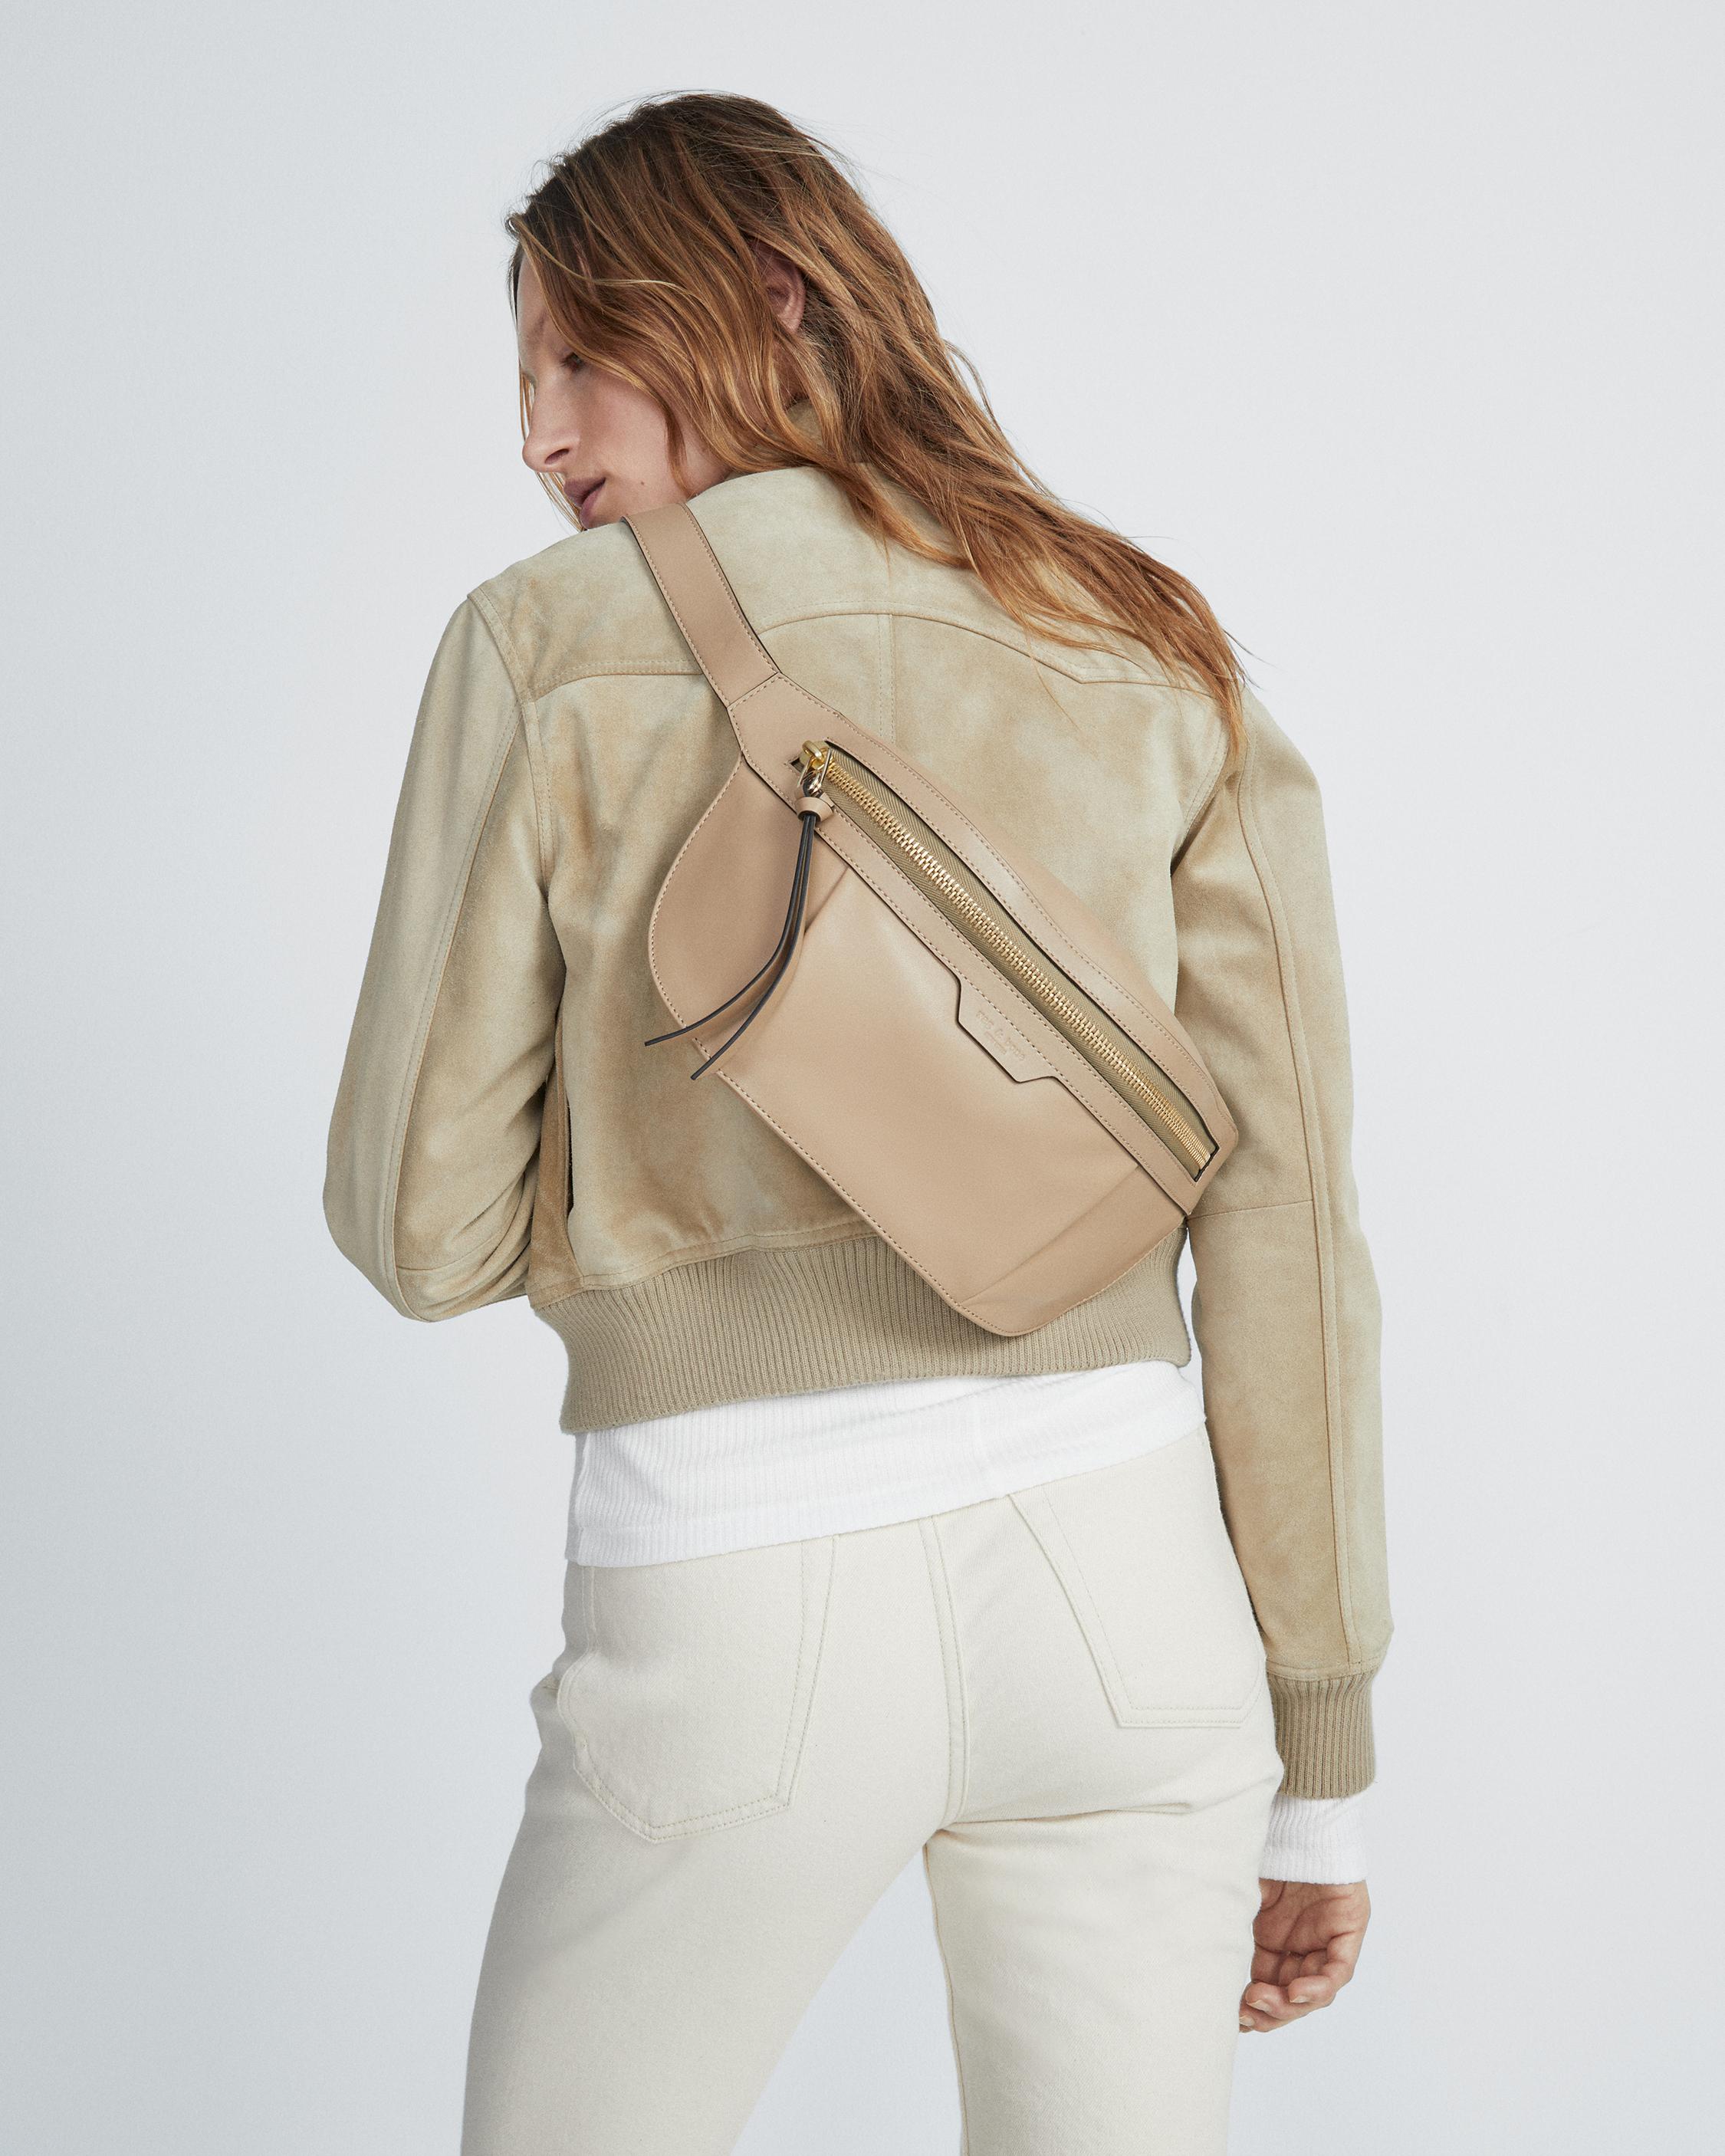 Commuter Fanny Pack | Leather Crossbody Belt Bag